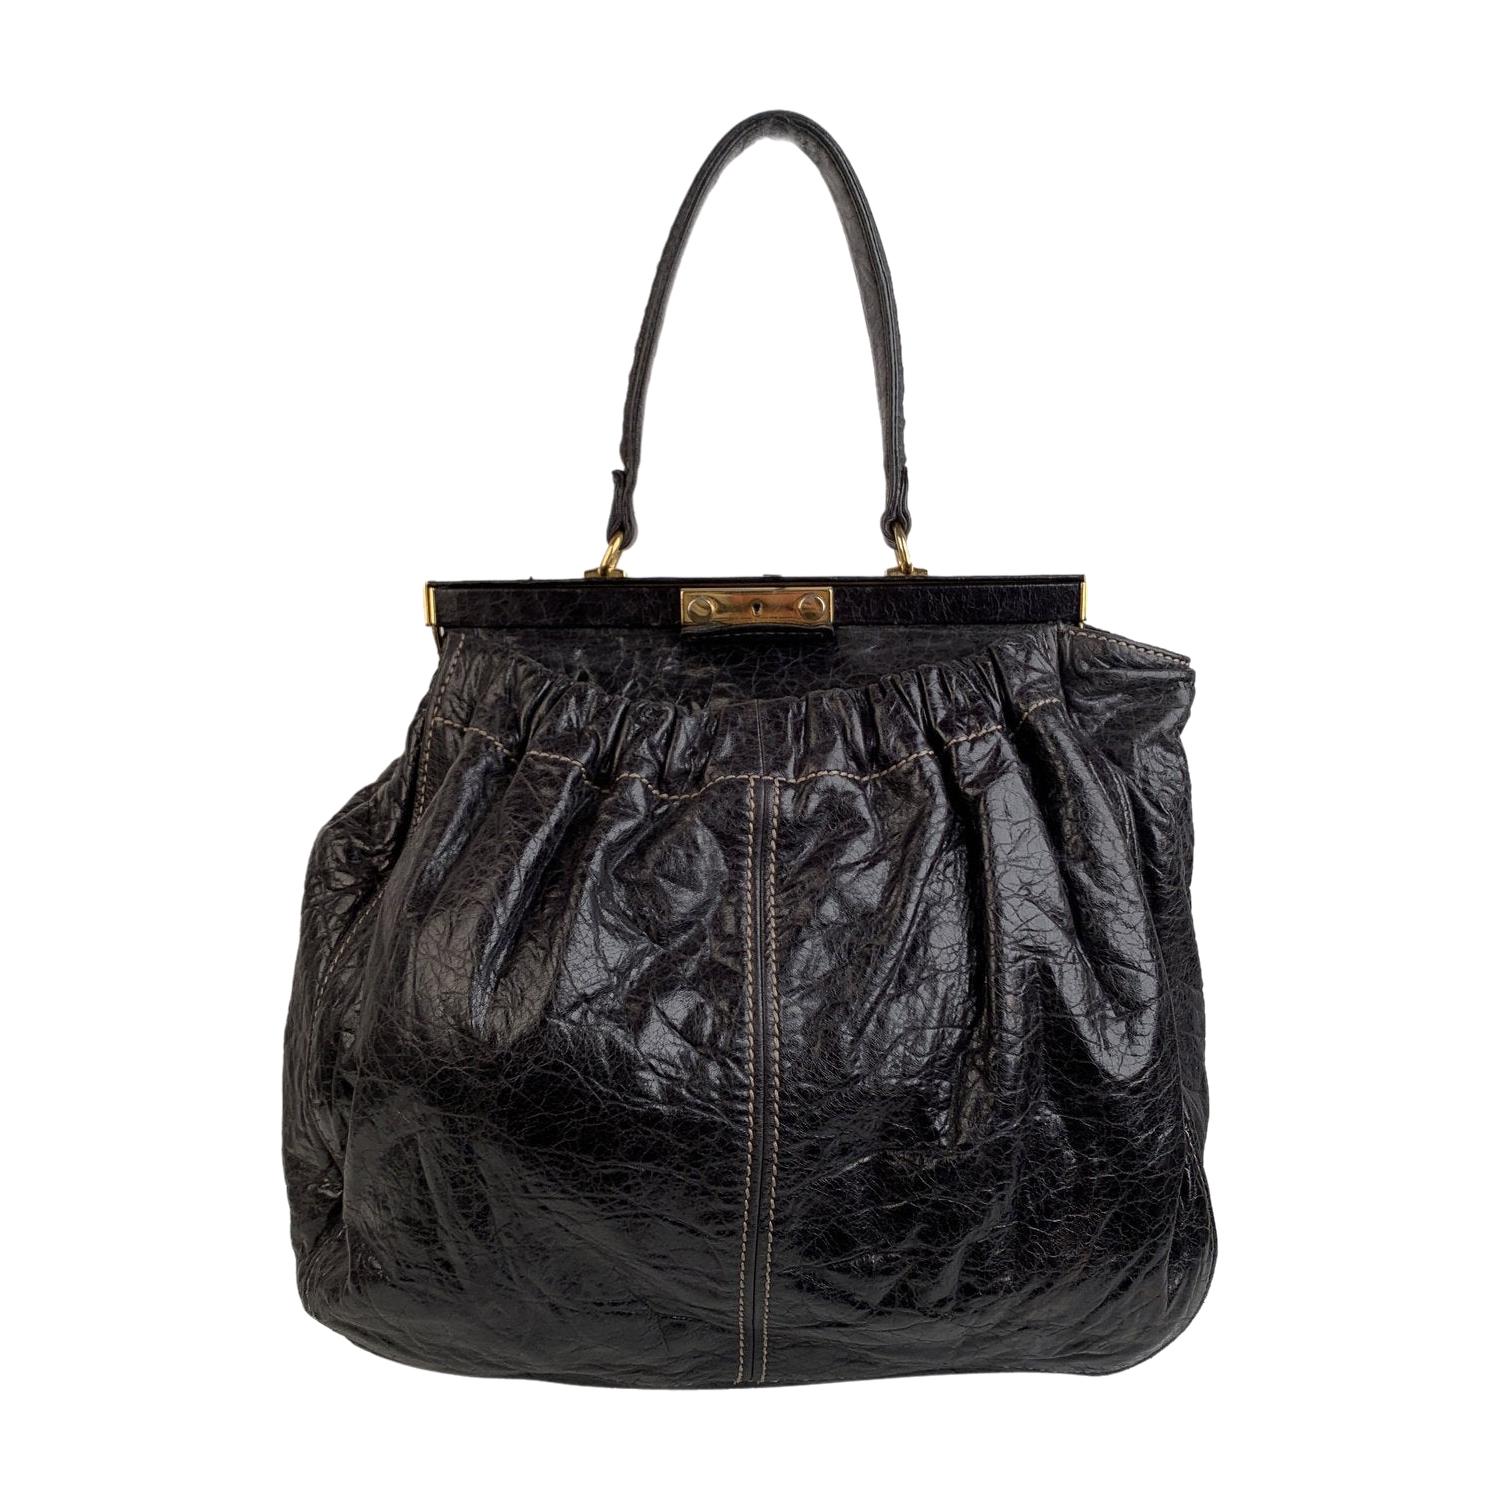 Miu Miu Black Distressed Leather Frame Tote Bag Satchel